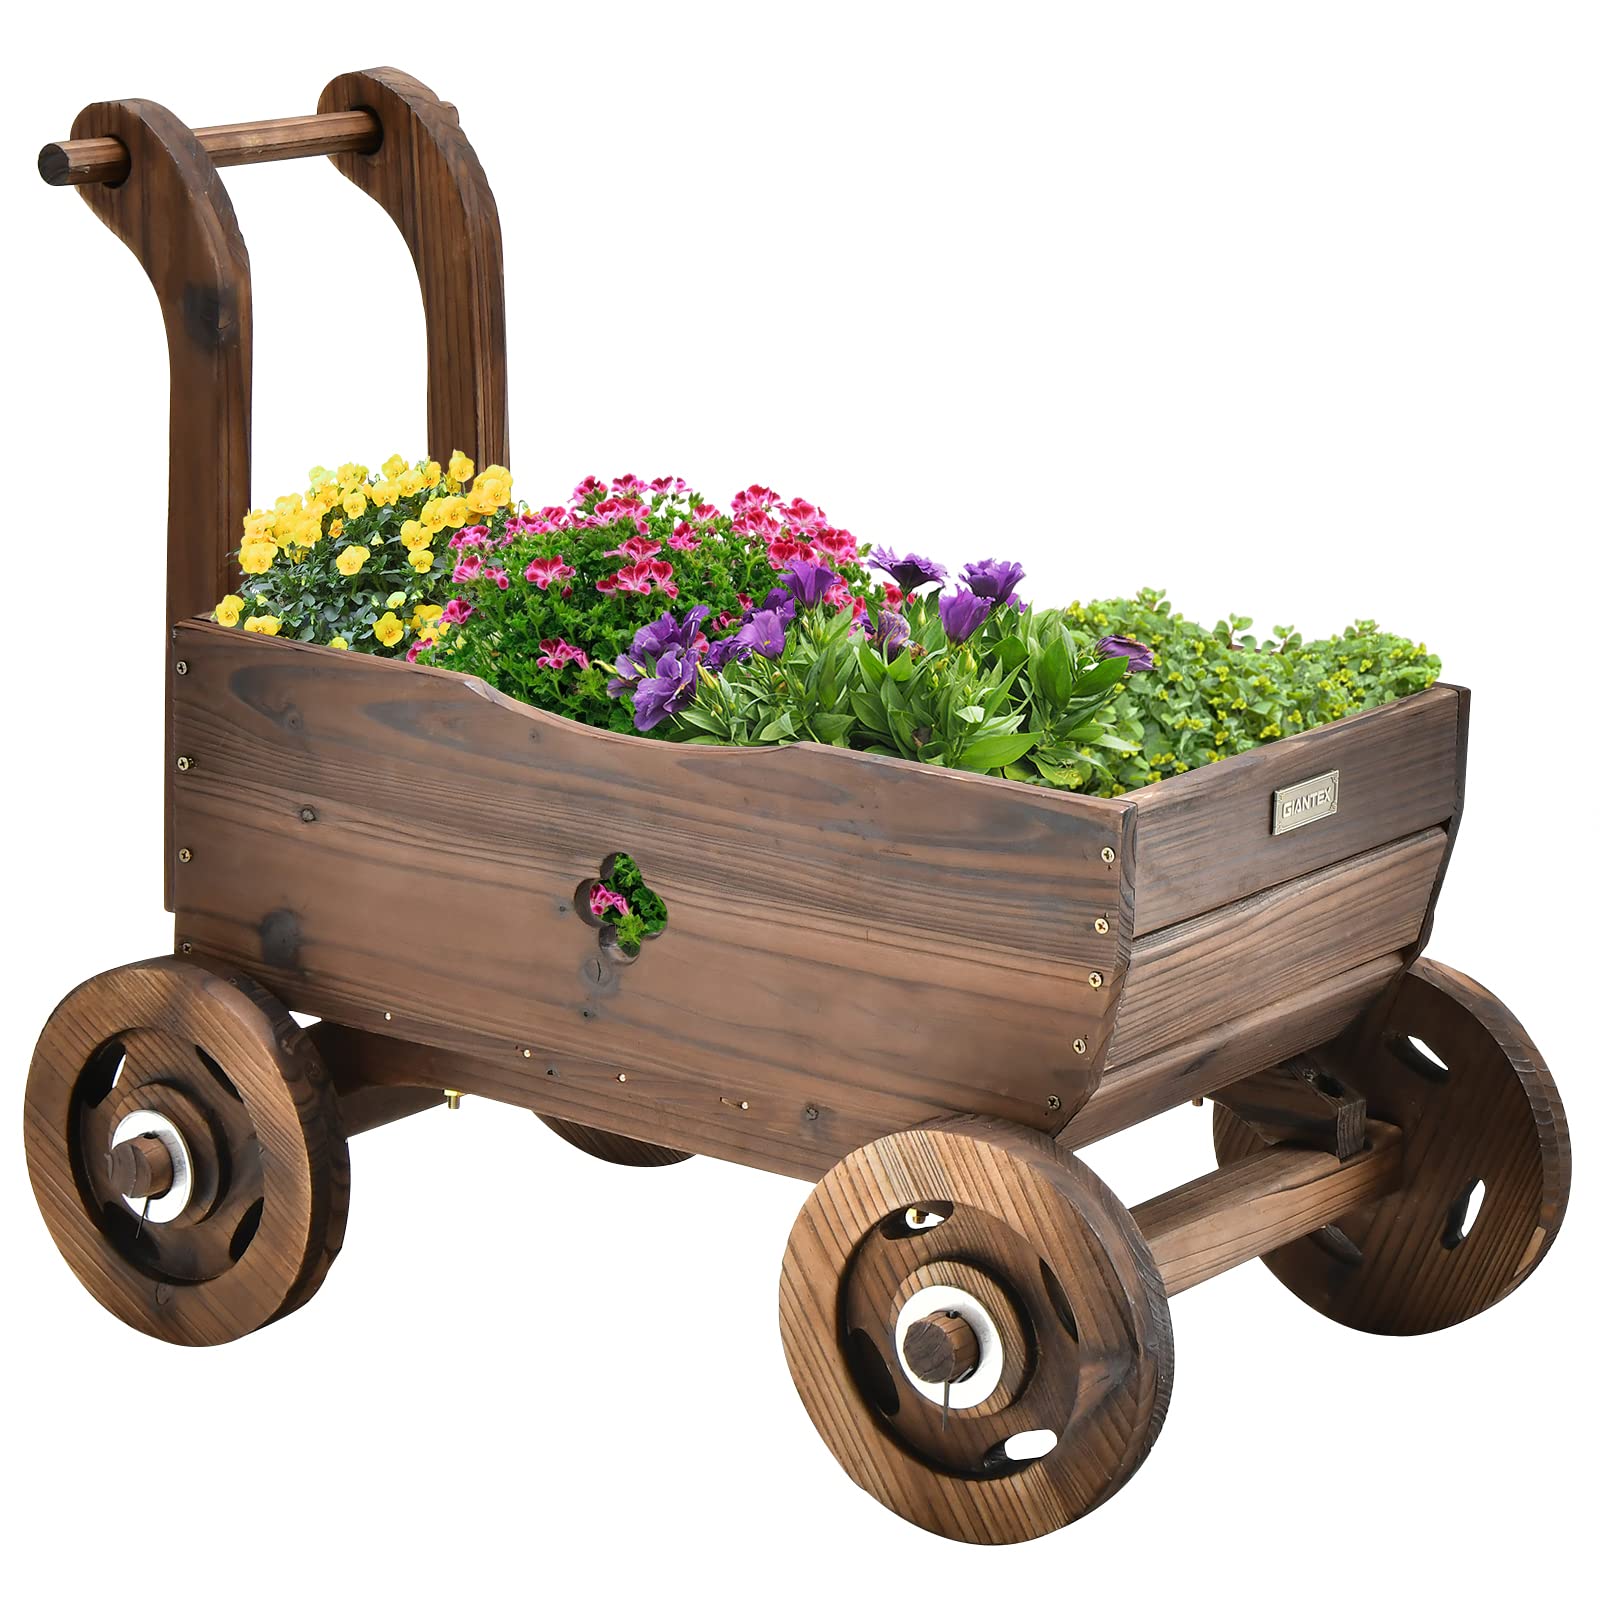 Giantex Wooden Wagon Planter Raised Bed on Wheels, Handle, Drainage Hole